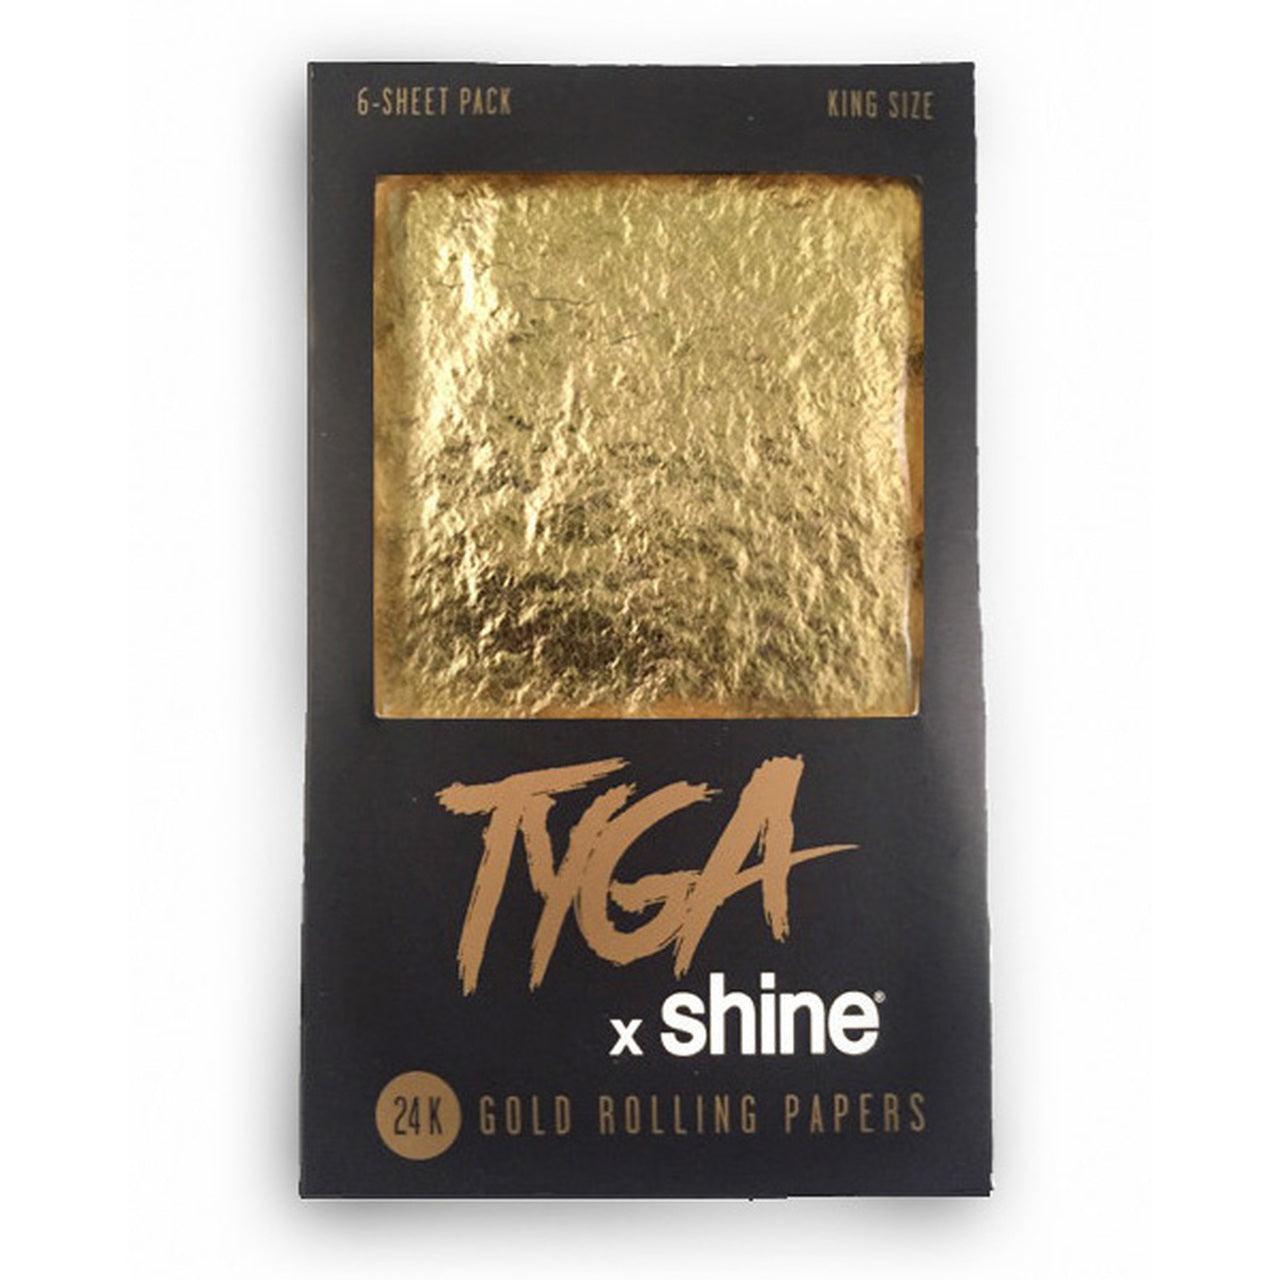 Shine Tyga 24k Gold Rolling Papers - King Size 6-Sheet Pack - Insomnia Smoke